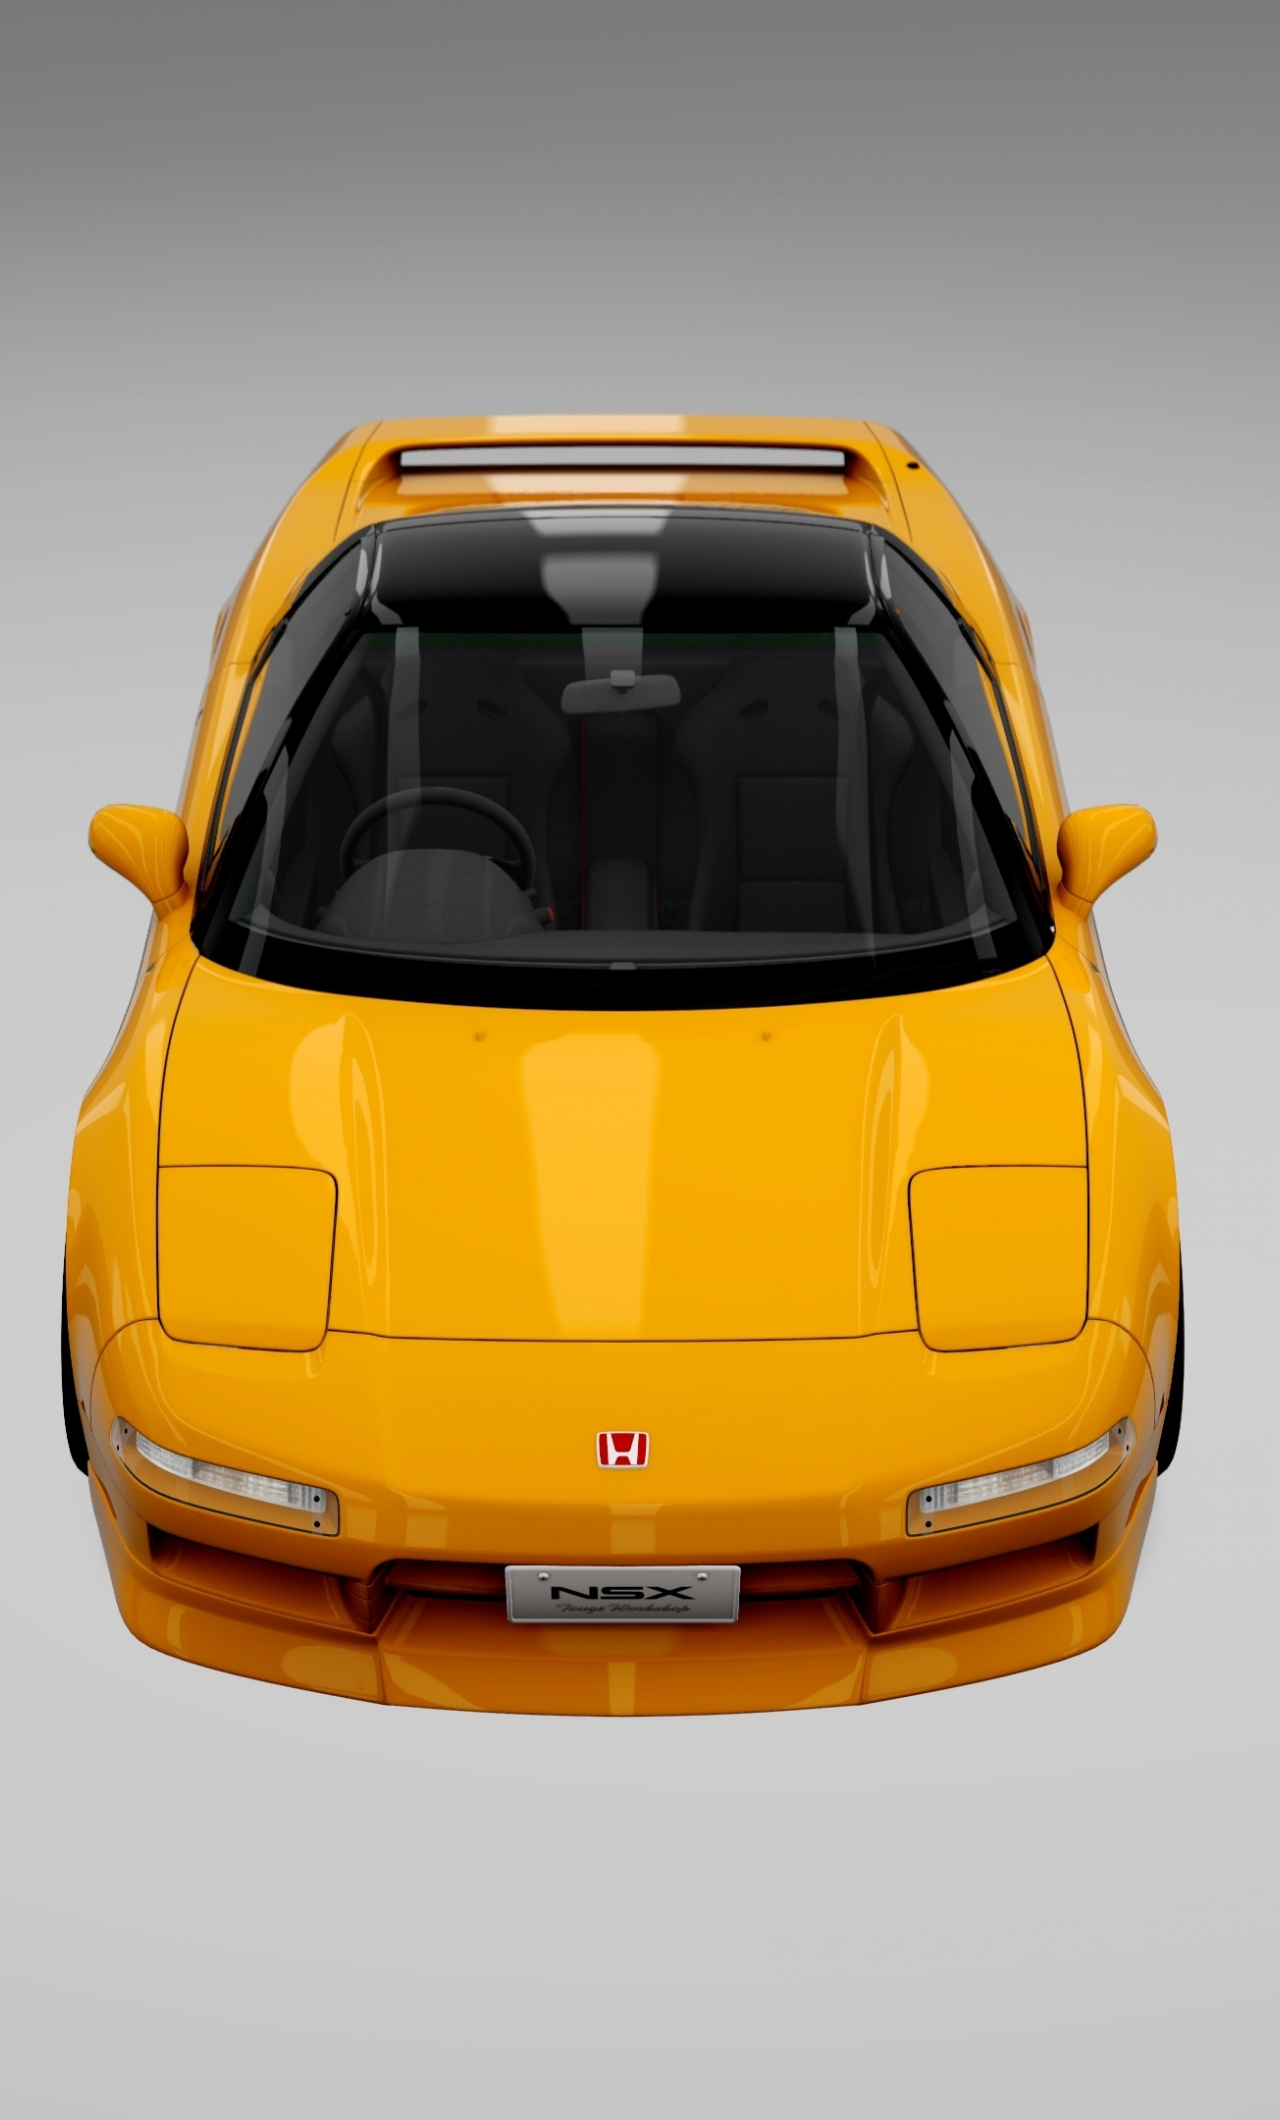 Download 1280x21 Wallpaper Honda Nsx Orange Car Iphone 6 Plus 1280x21 Hd Image Background